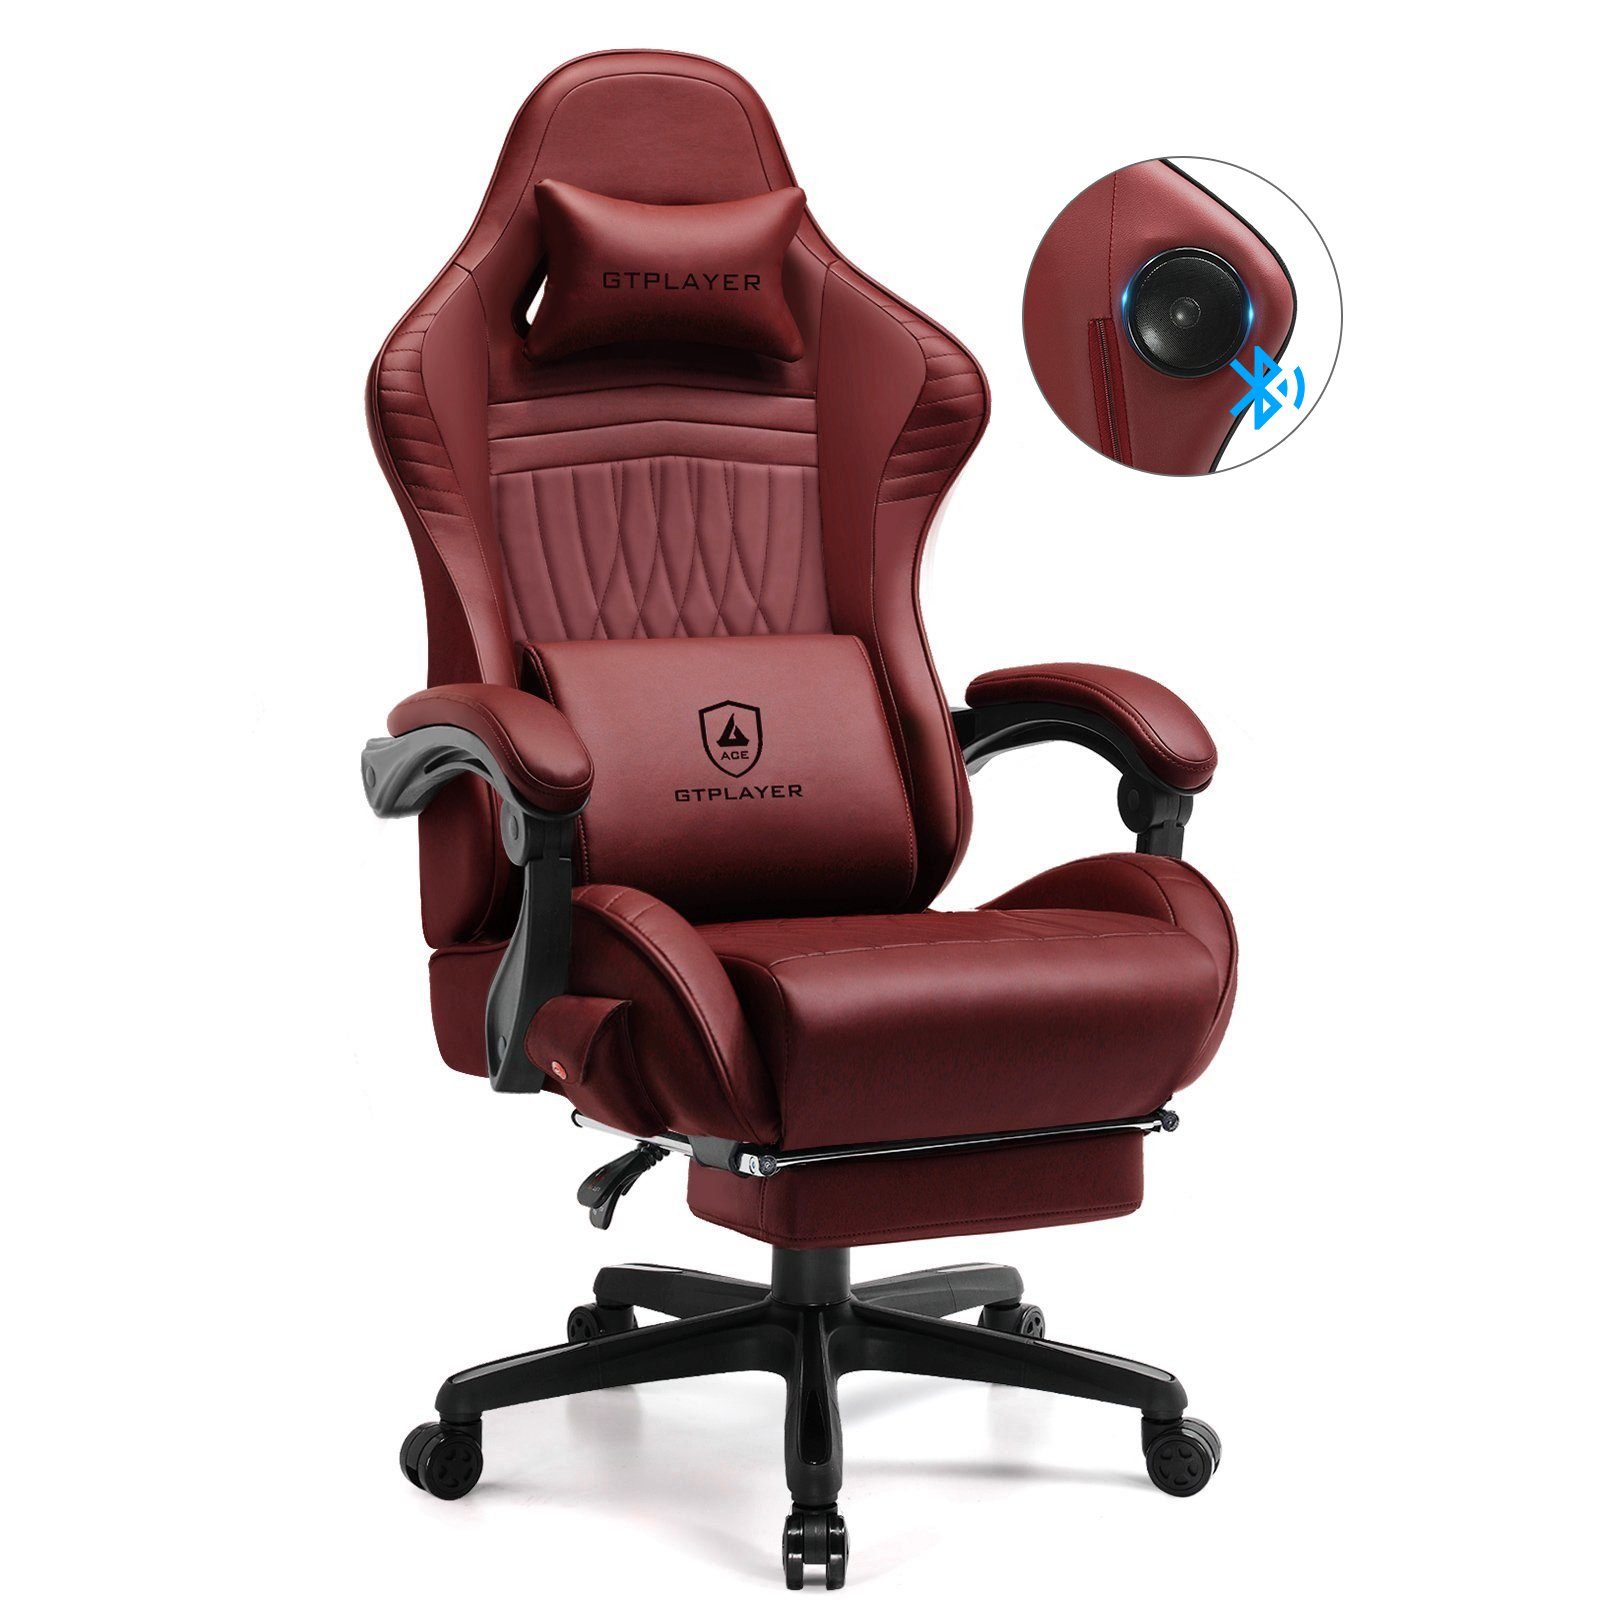 GTPLAYER Gaming-Stuhl ergonomischer Bürostuhl mit HIFI Stereo Lautsprecher, Verbindungsarmlehen beeindrukende Klang-atmosphäre Rotwein